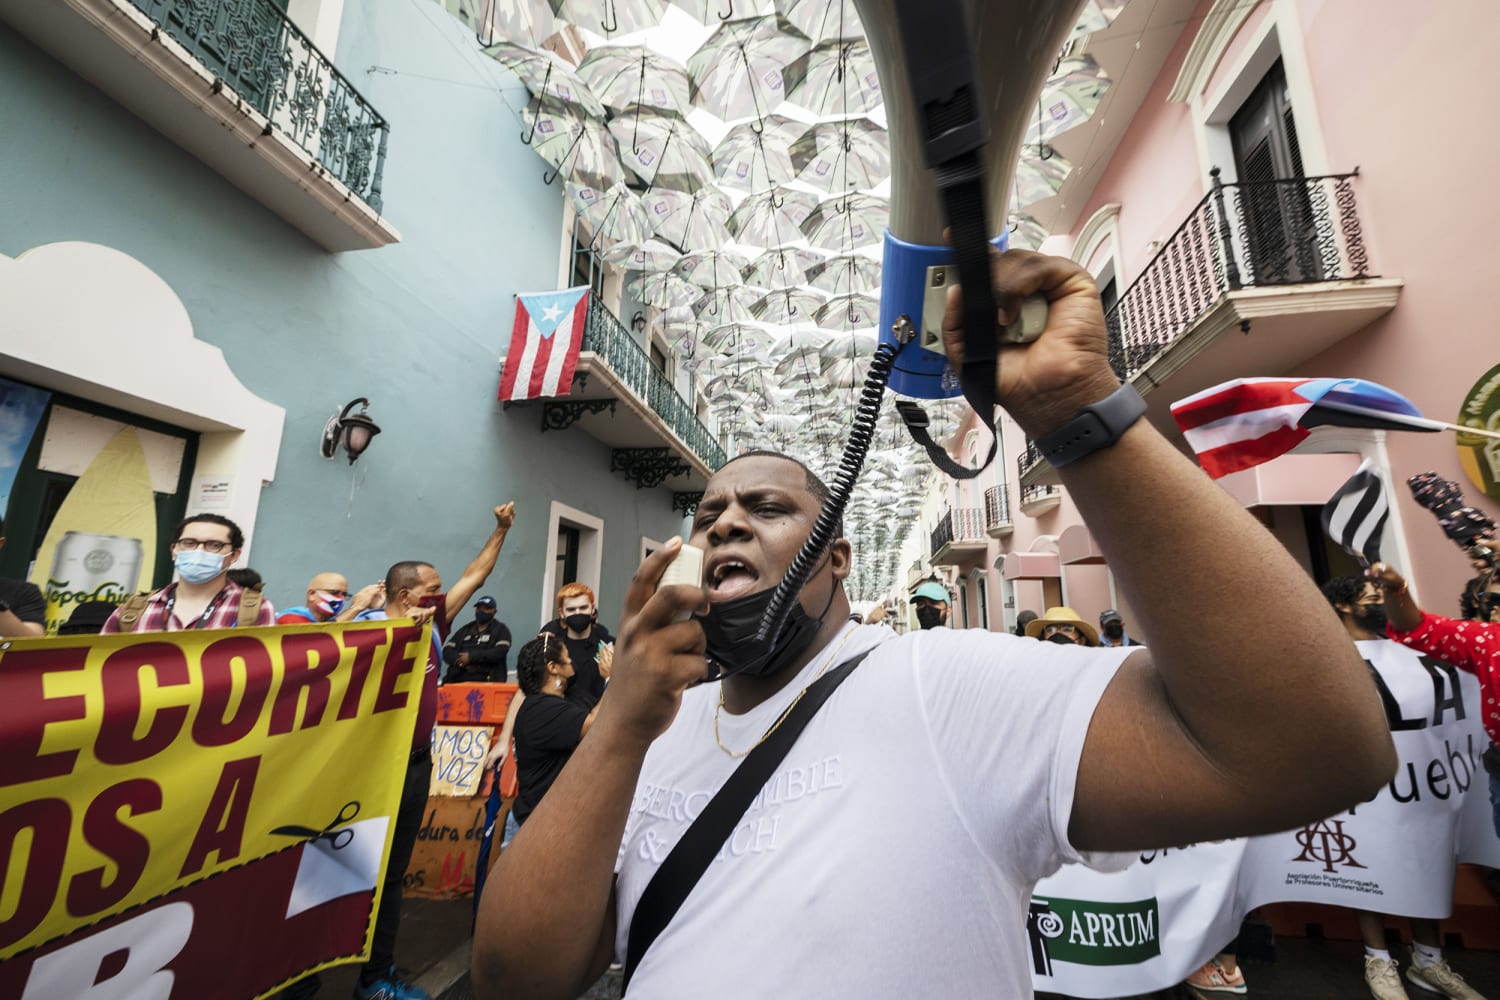 https://media-cldnry.s-nbcnews.com/image/upload/rockcms/2021-09/210917-puerto-rico-economy-protest-file-se-536p-ae7710.jpg